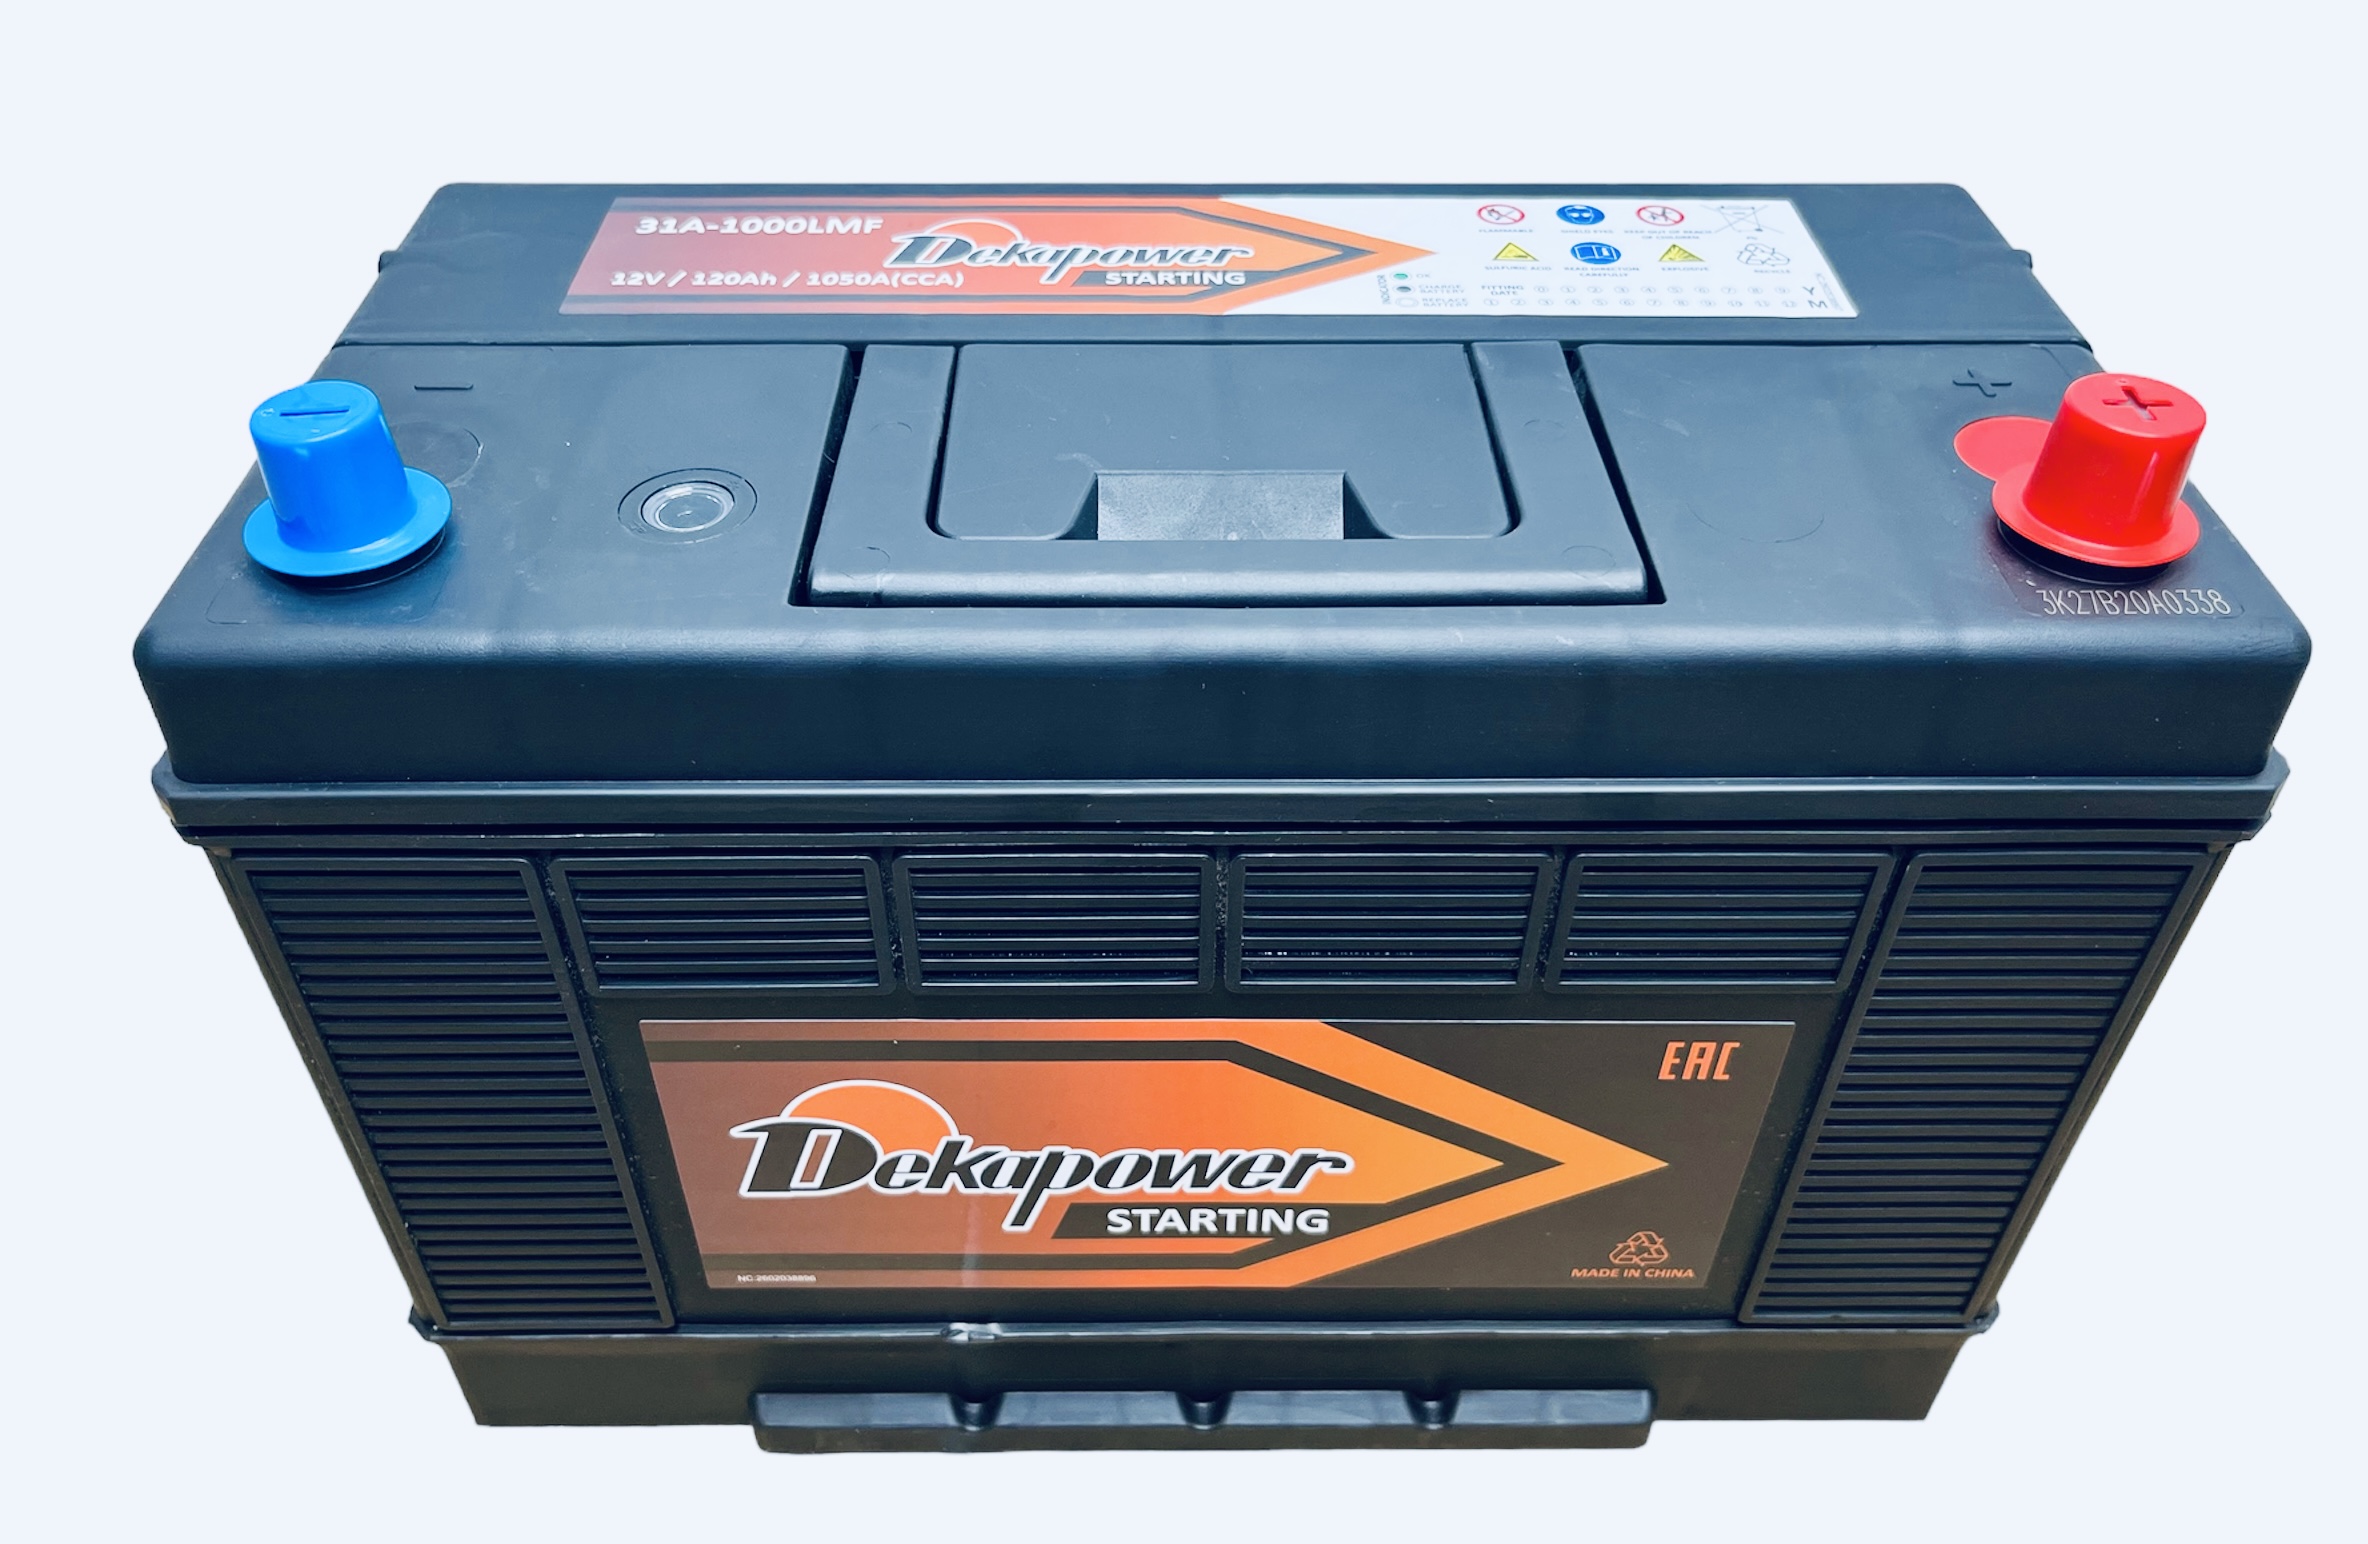 Аккумулятор DekaPower 31A-1000LMF 120 Ач о.п. 1050 А 